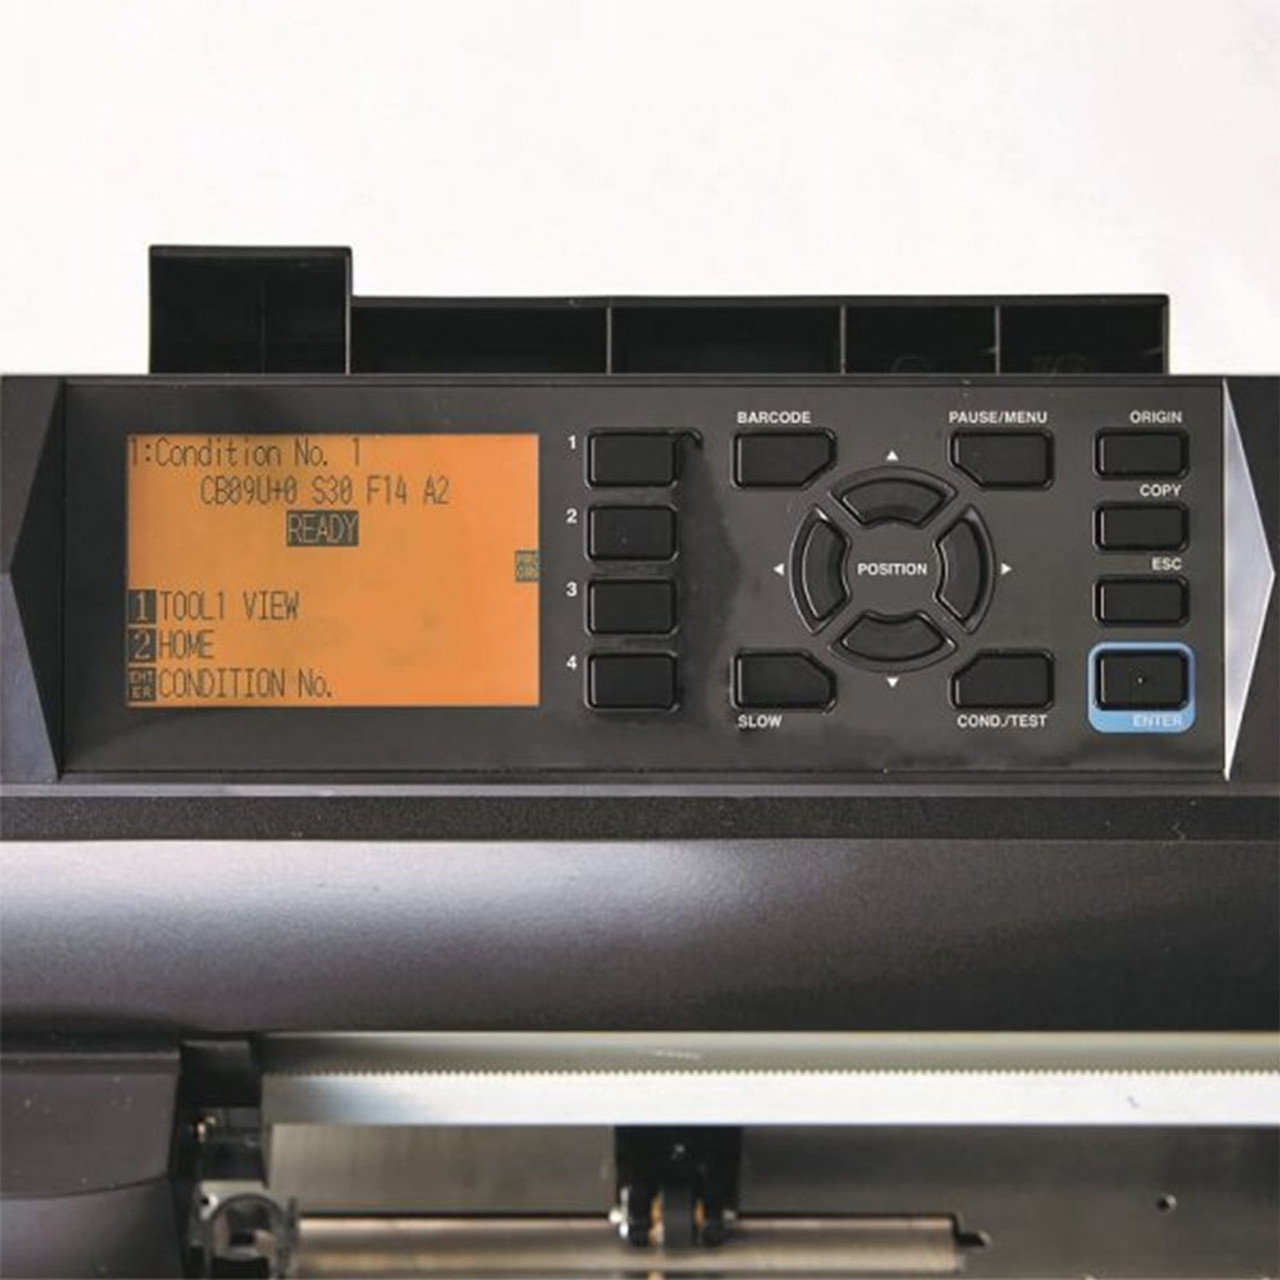 Graphtec CE7000-130AKZ Vinyl Cutter w/Stand